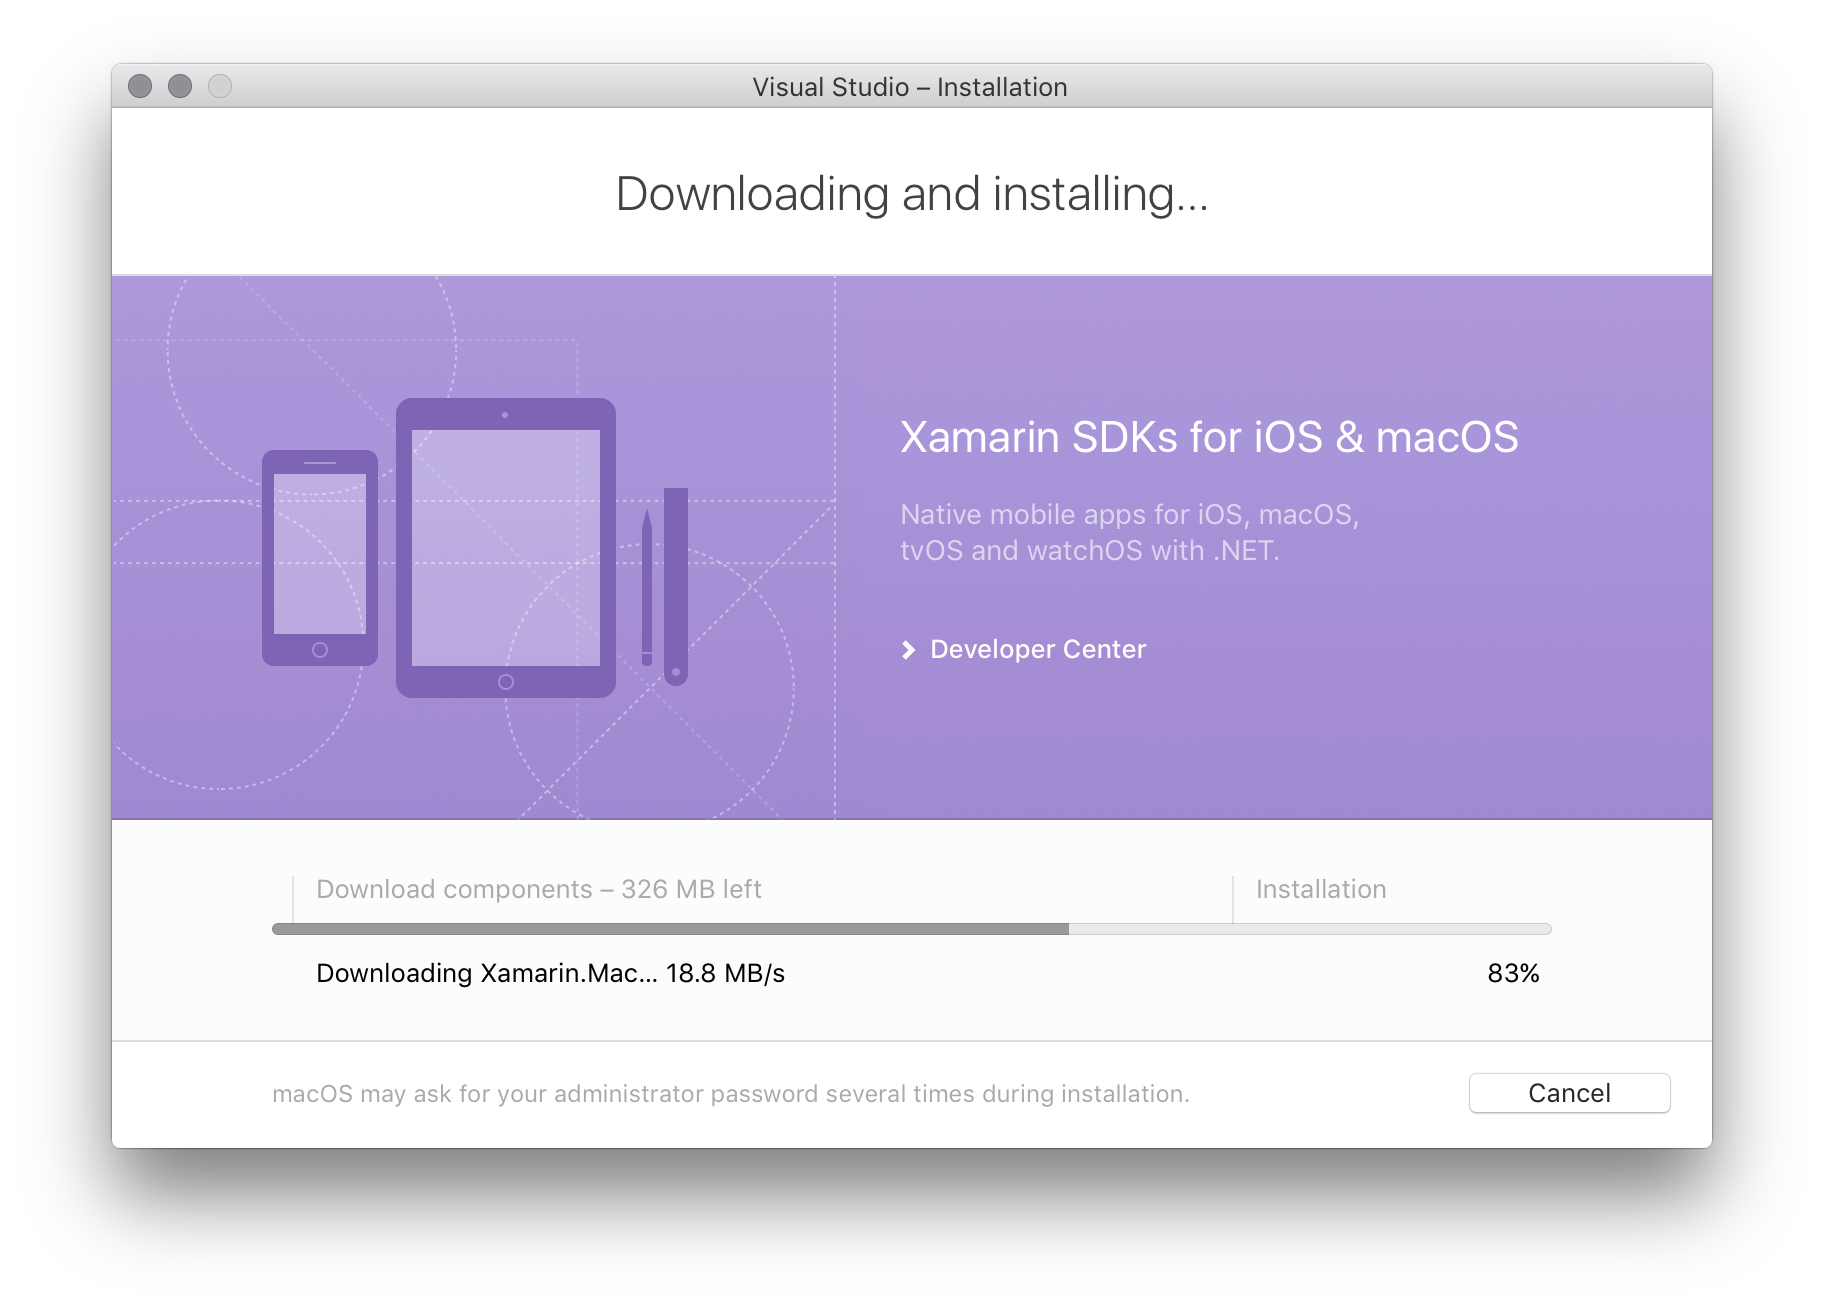 Downloading Xamarin.Mac